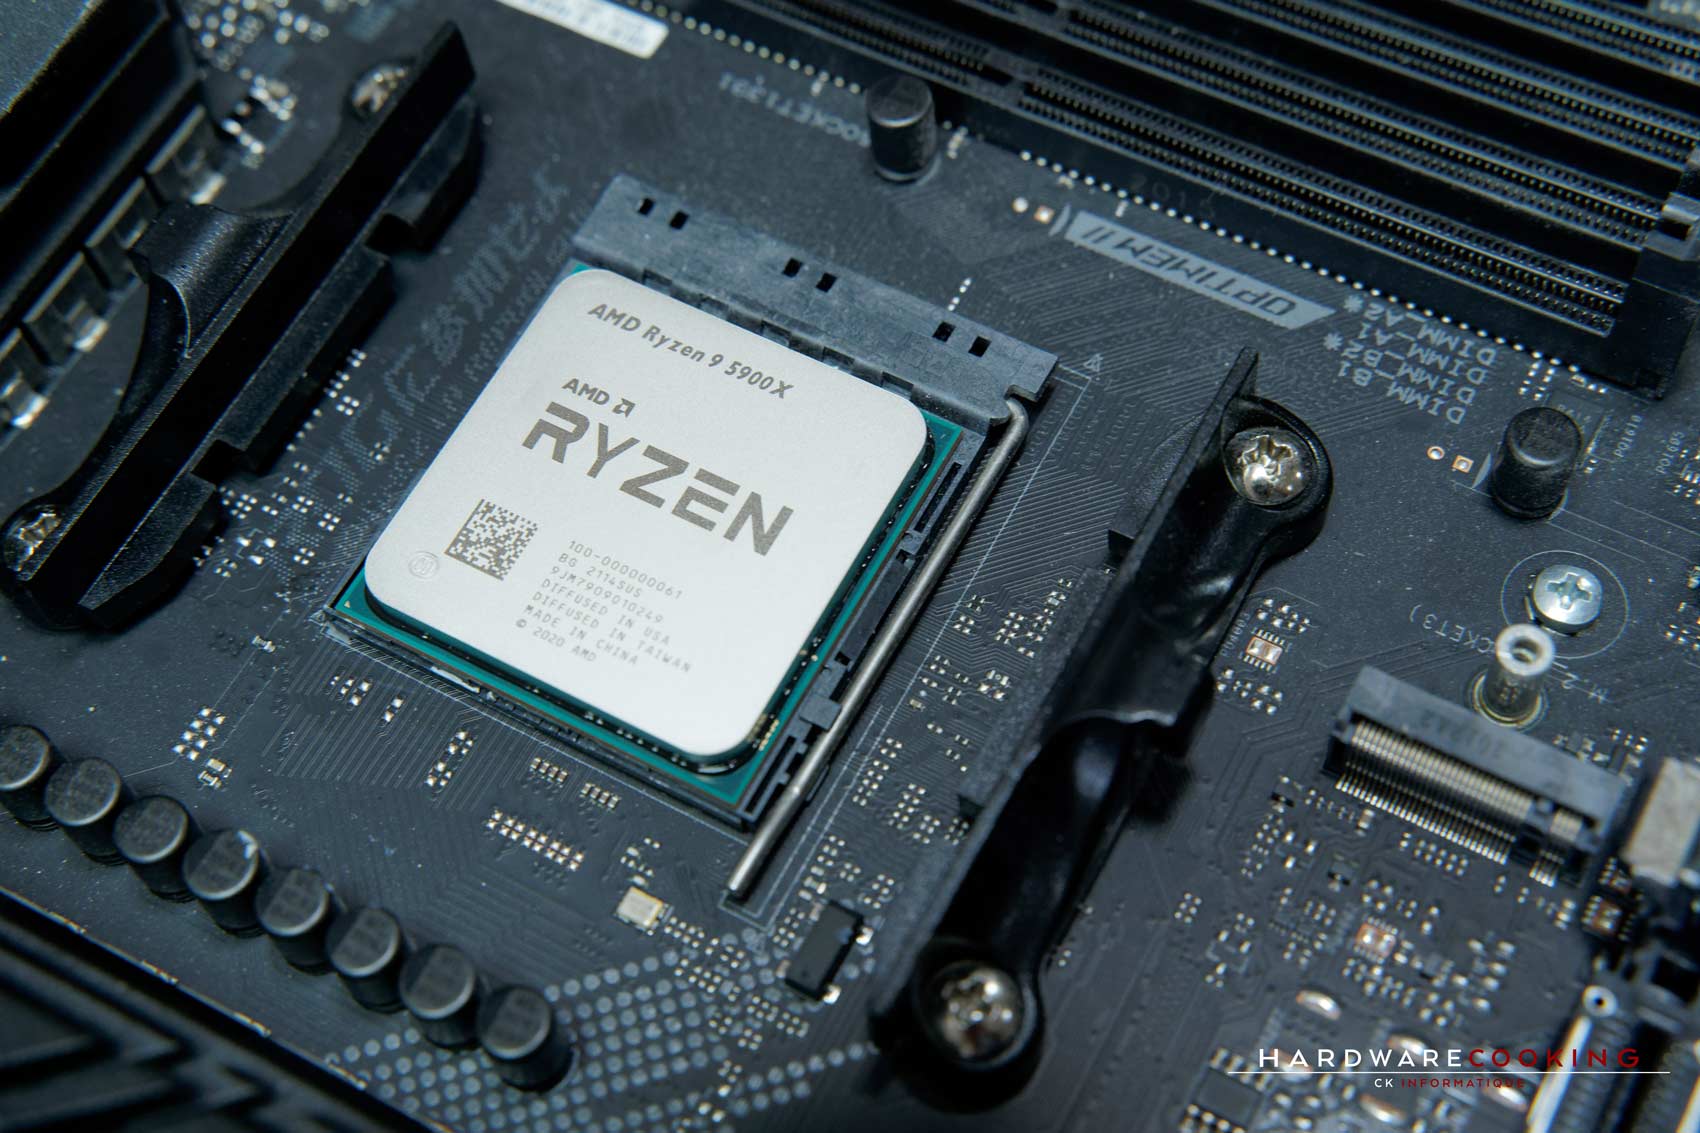 AMD Ryzen 9 5900X 12 Core 24 Thread Up To 4.8Ghz AM4 - No HSF